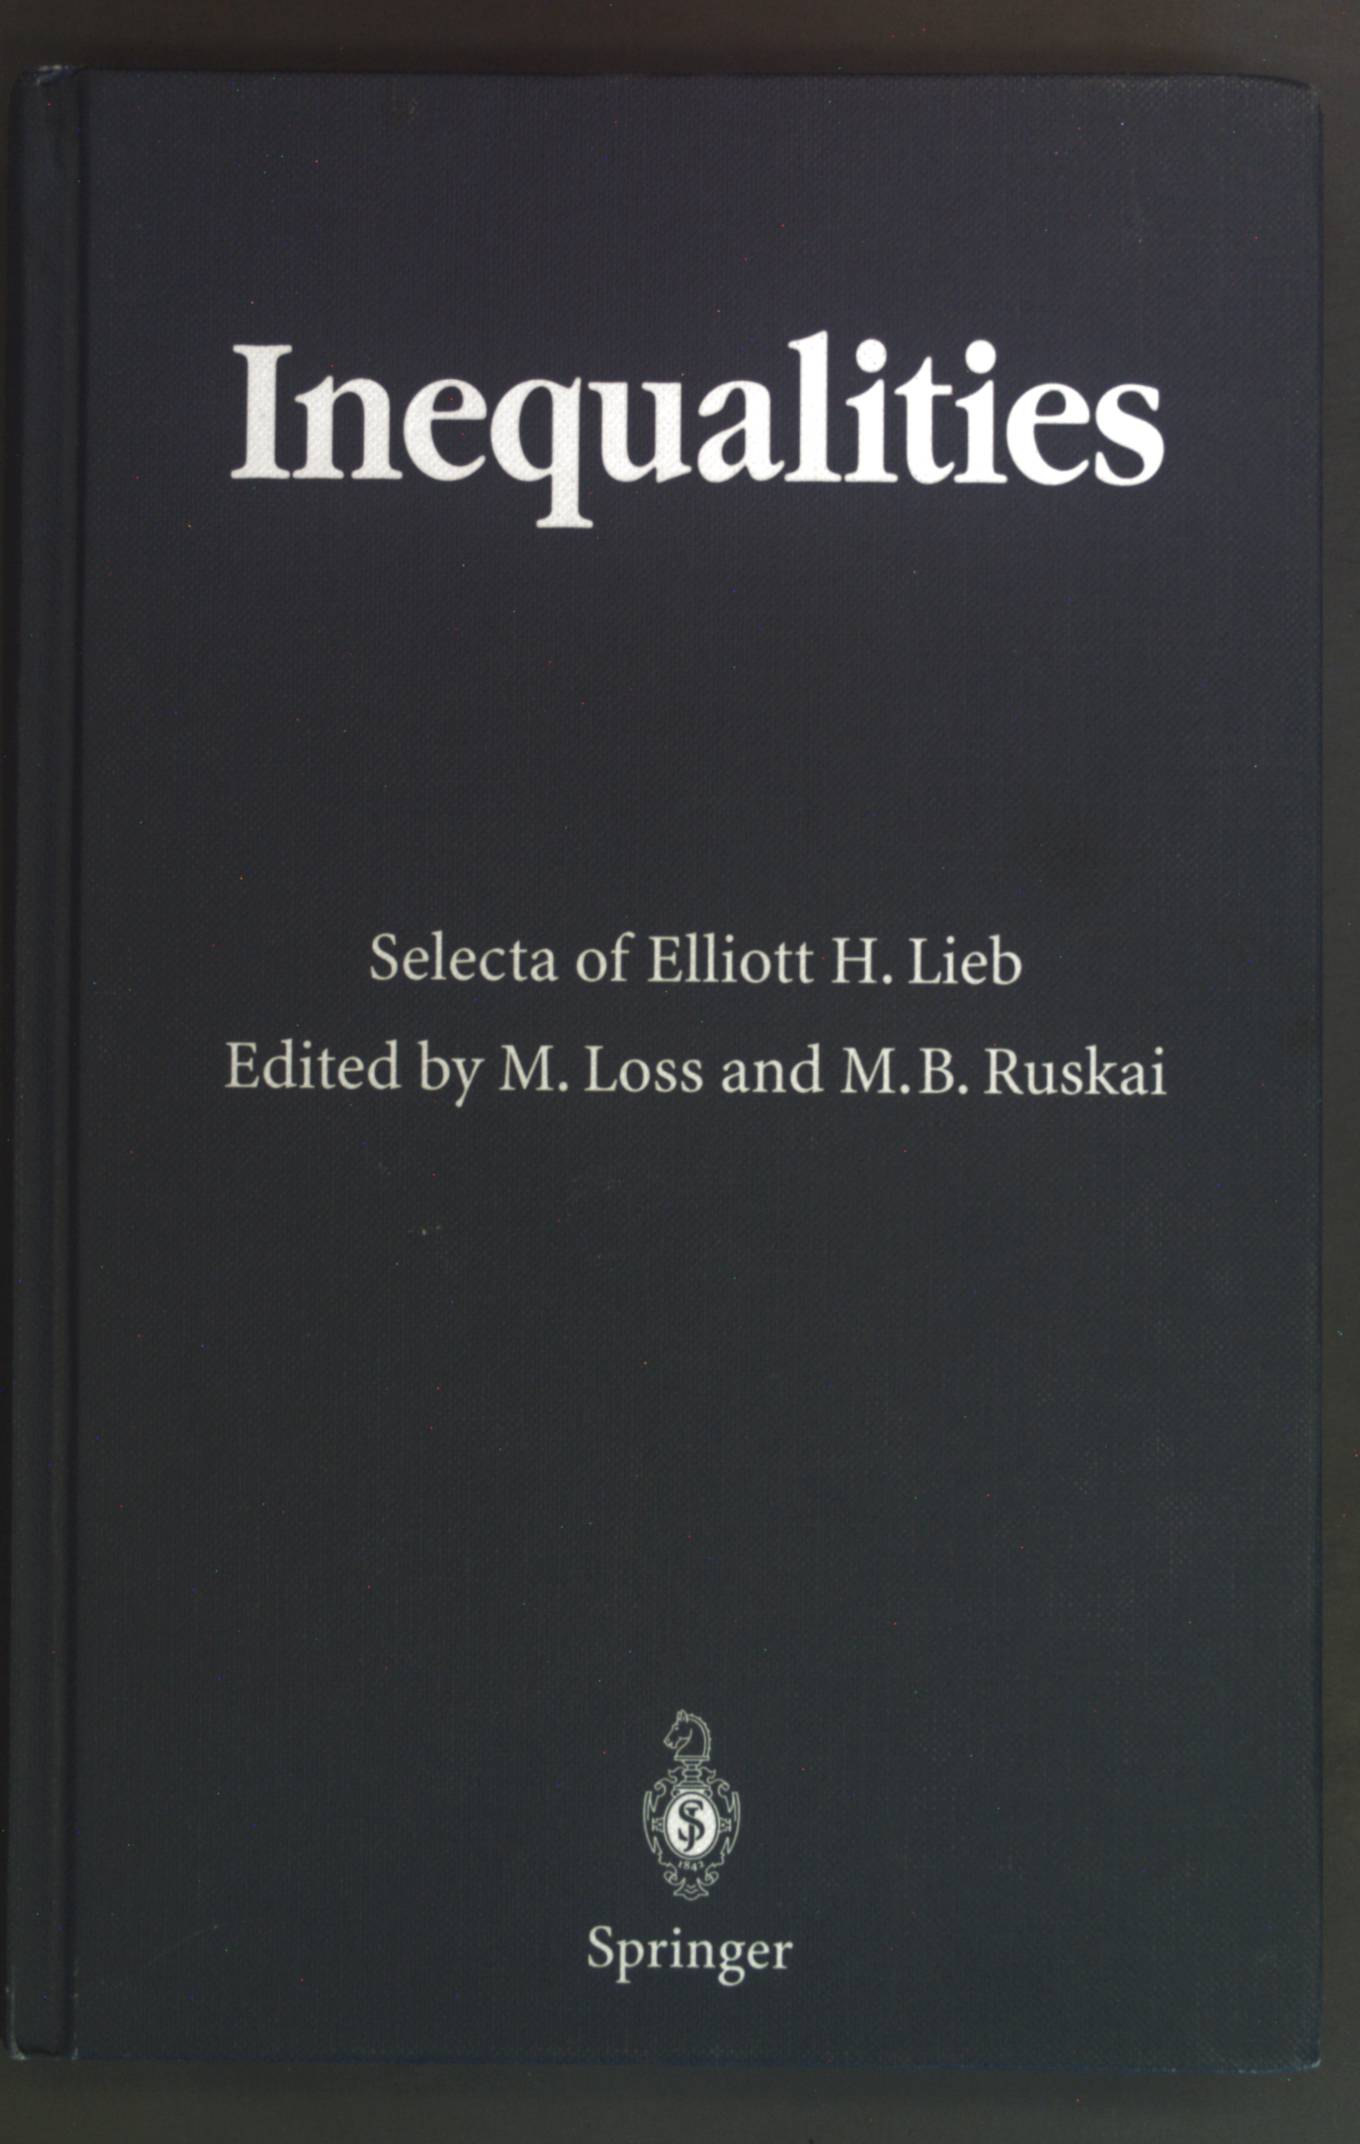 Inequalities : selecta of Elliott H. Lieb. - Lieb, Elliott H. and Michael Loss